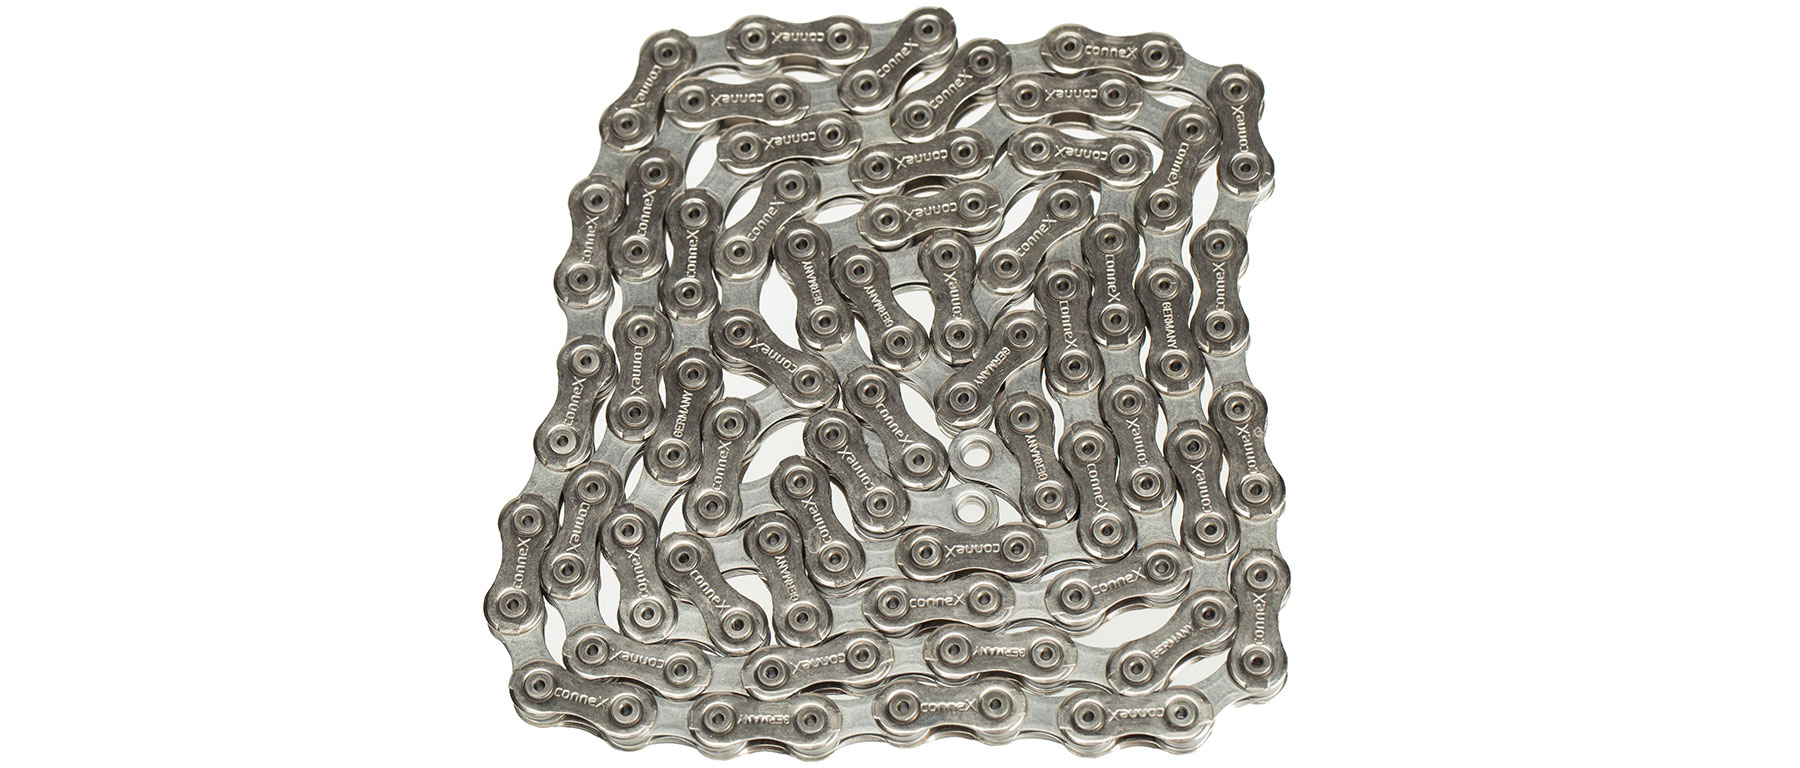 Wippermann ConneX 10s1 Chain